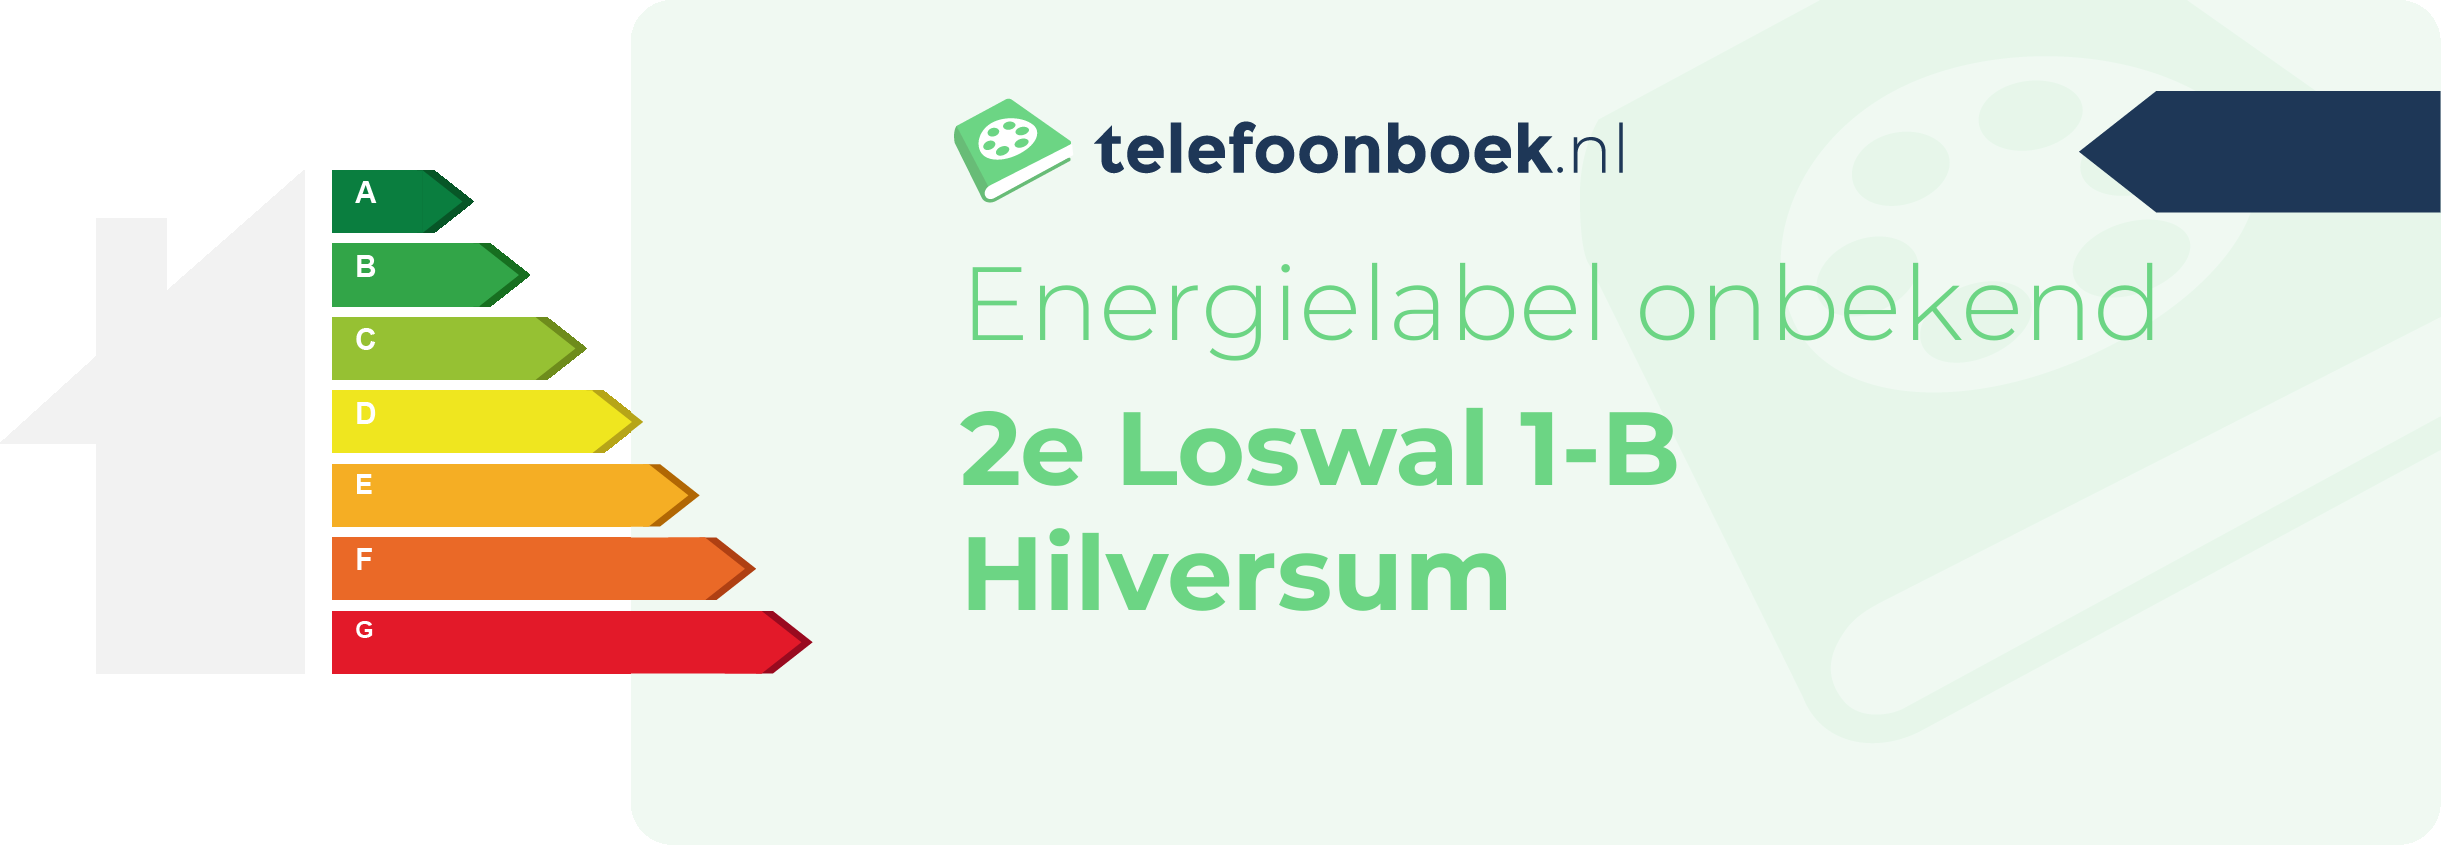 Energielabel 2e Loswal 1-B Hilversum